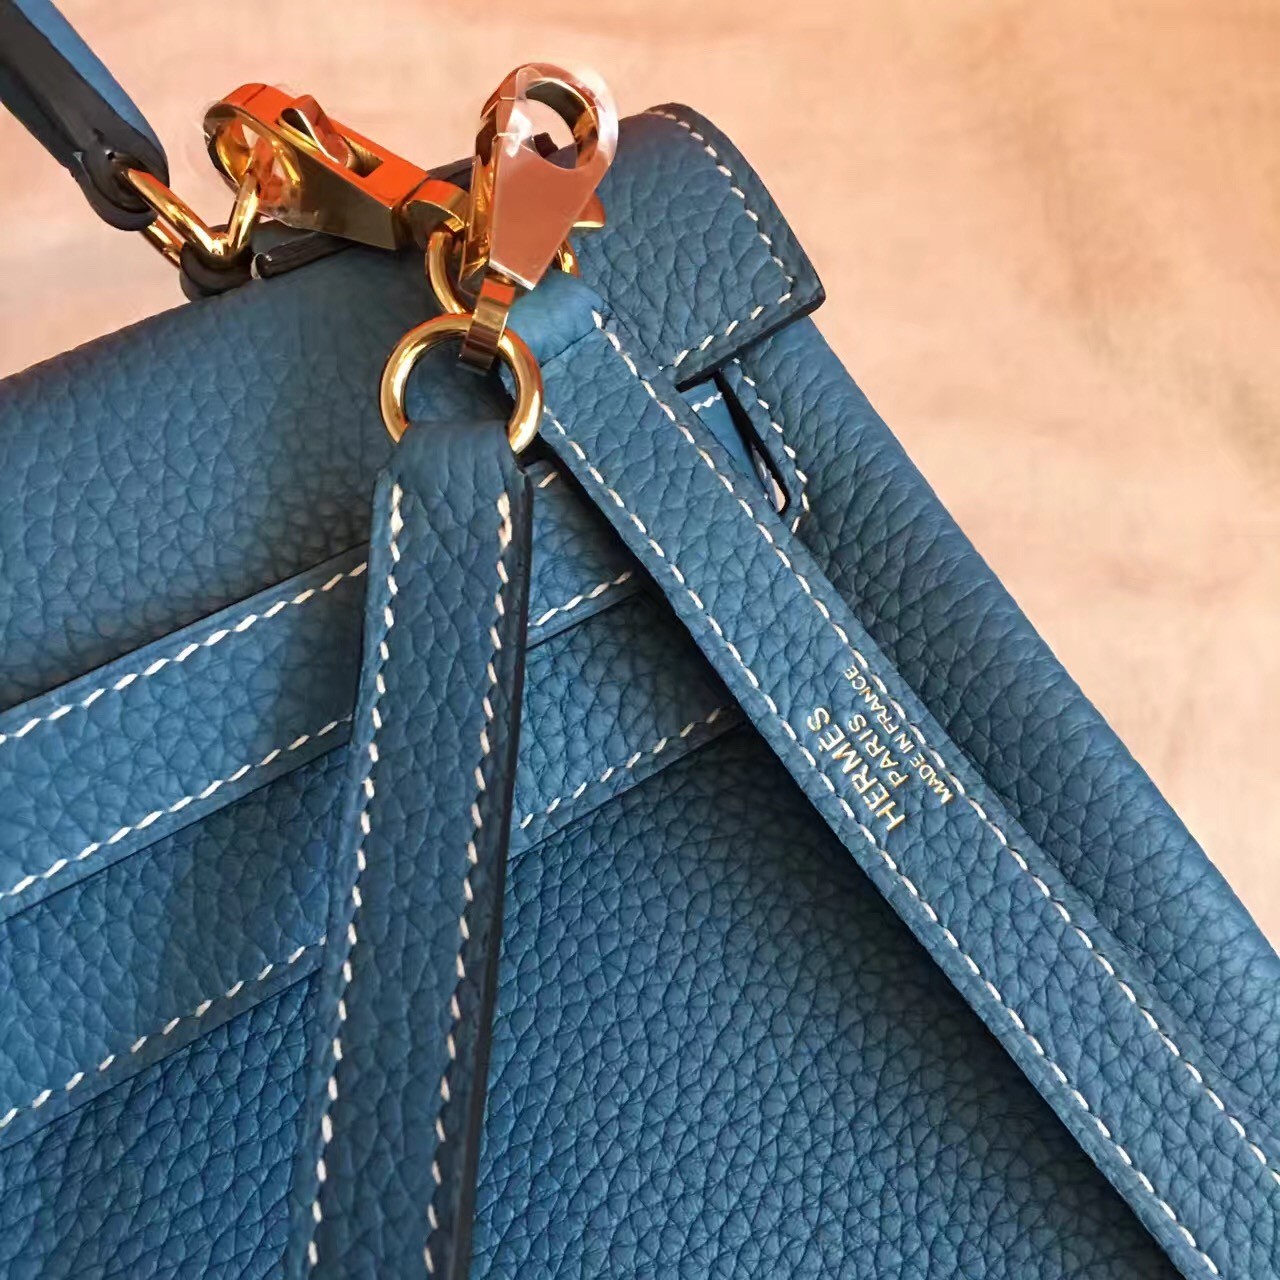 Hermes Kelly 25 Handbag CC75 Blue Jean Swift And Canvas SHW